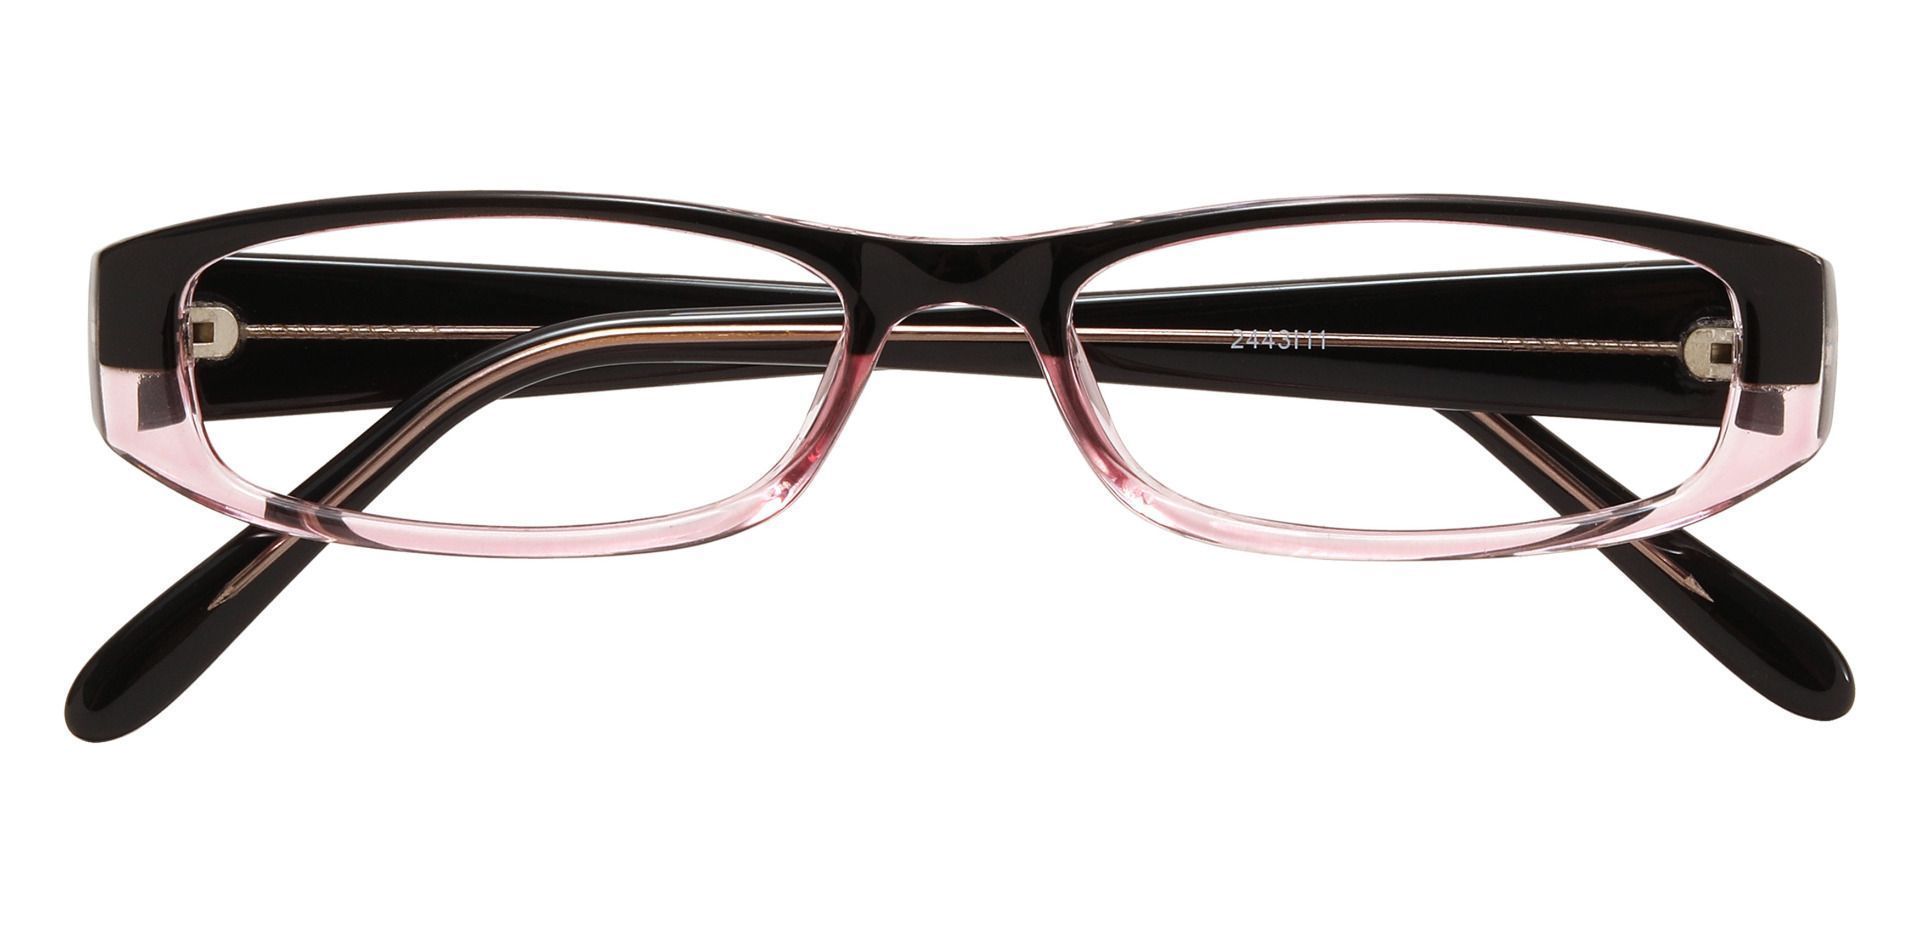 Elgin Rectangle Single Vision Glasses - Pink